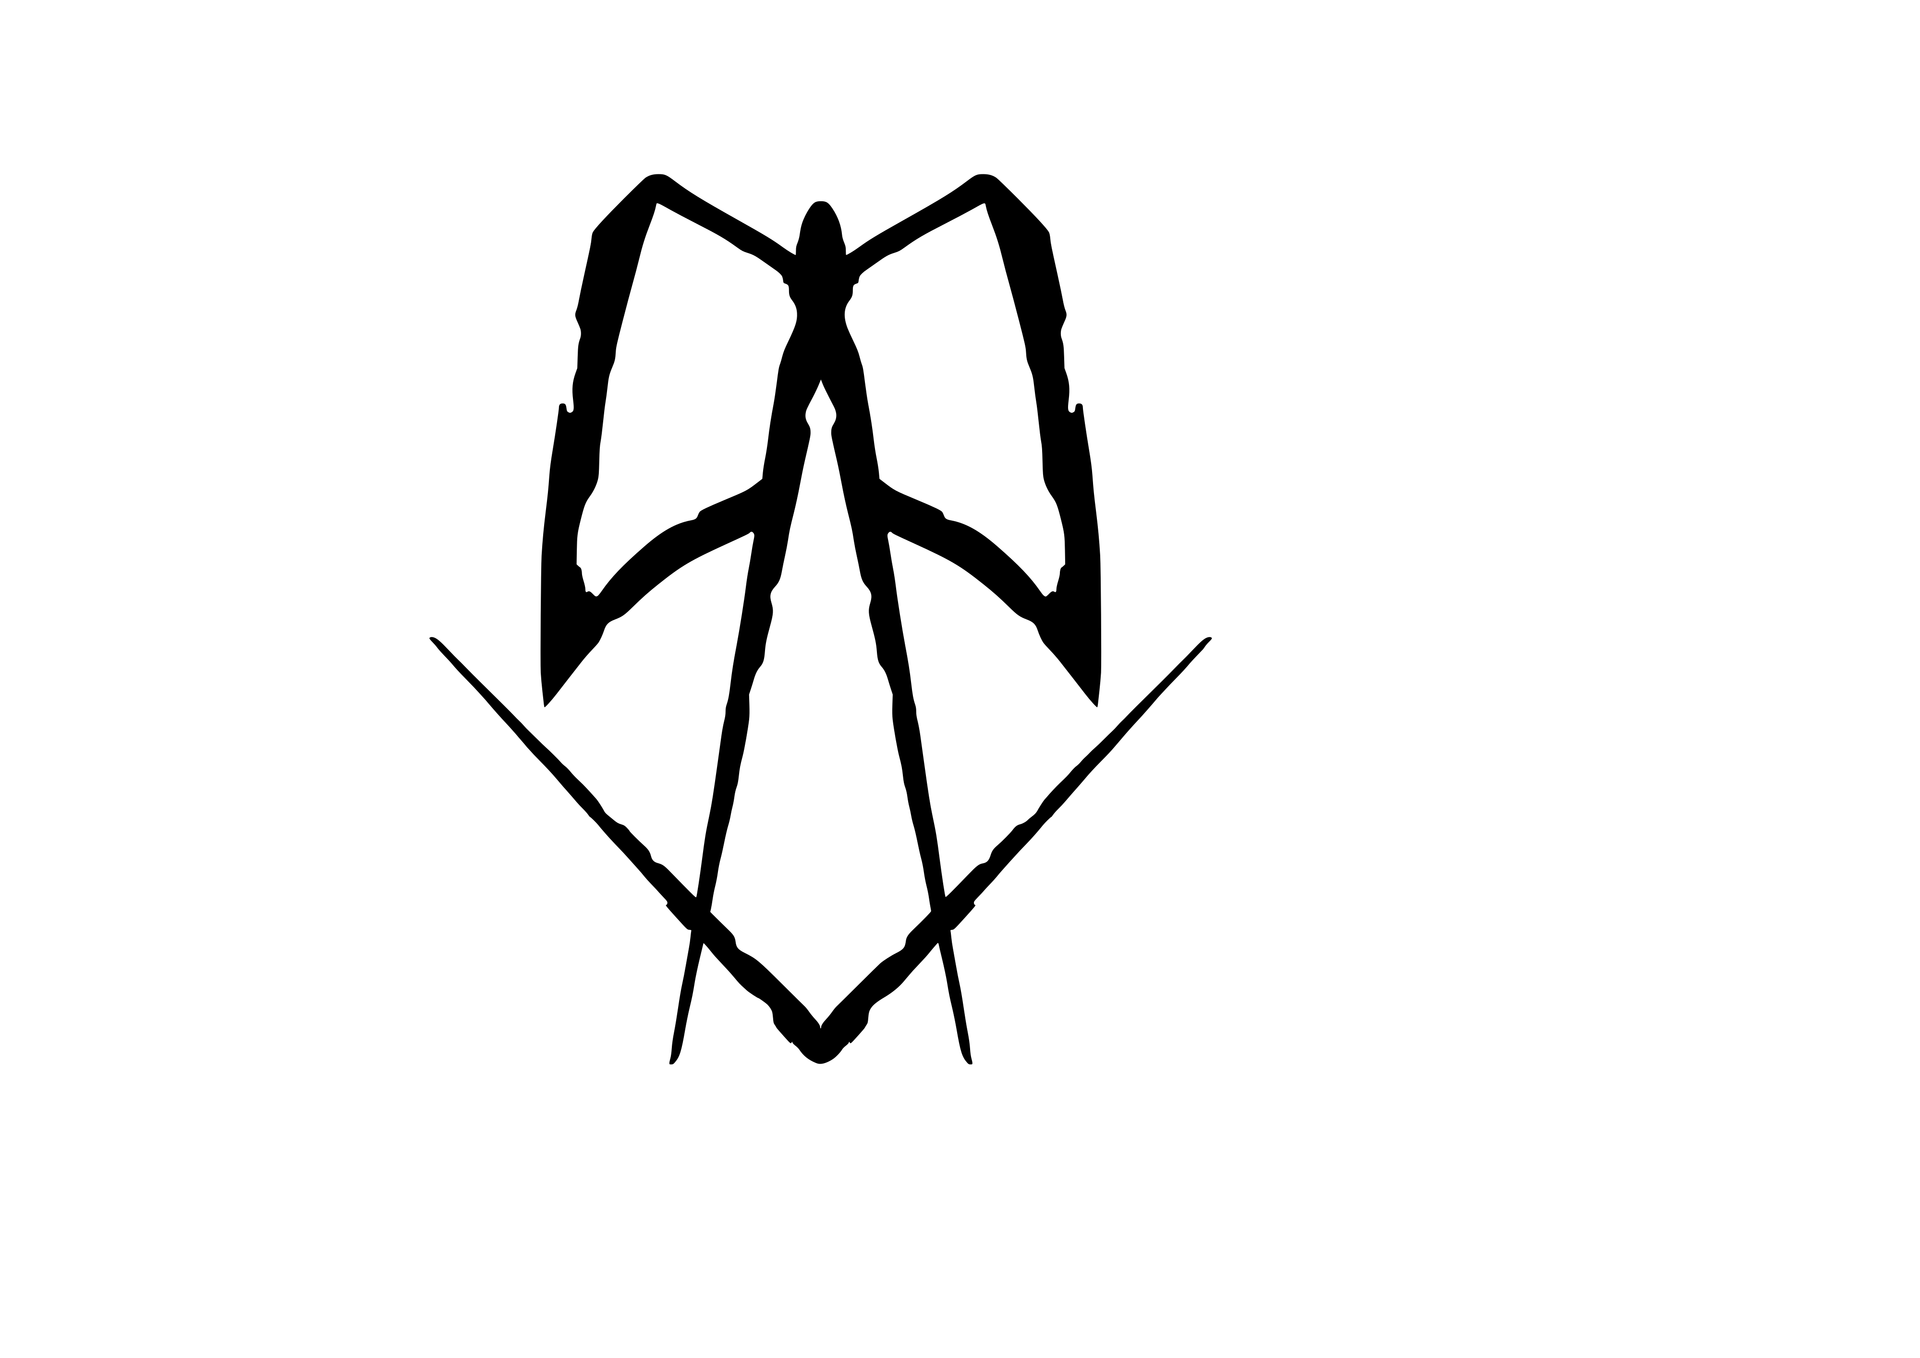 pickhells-logo 1.0 noir par bender